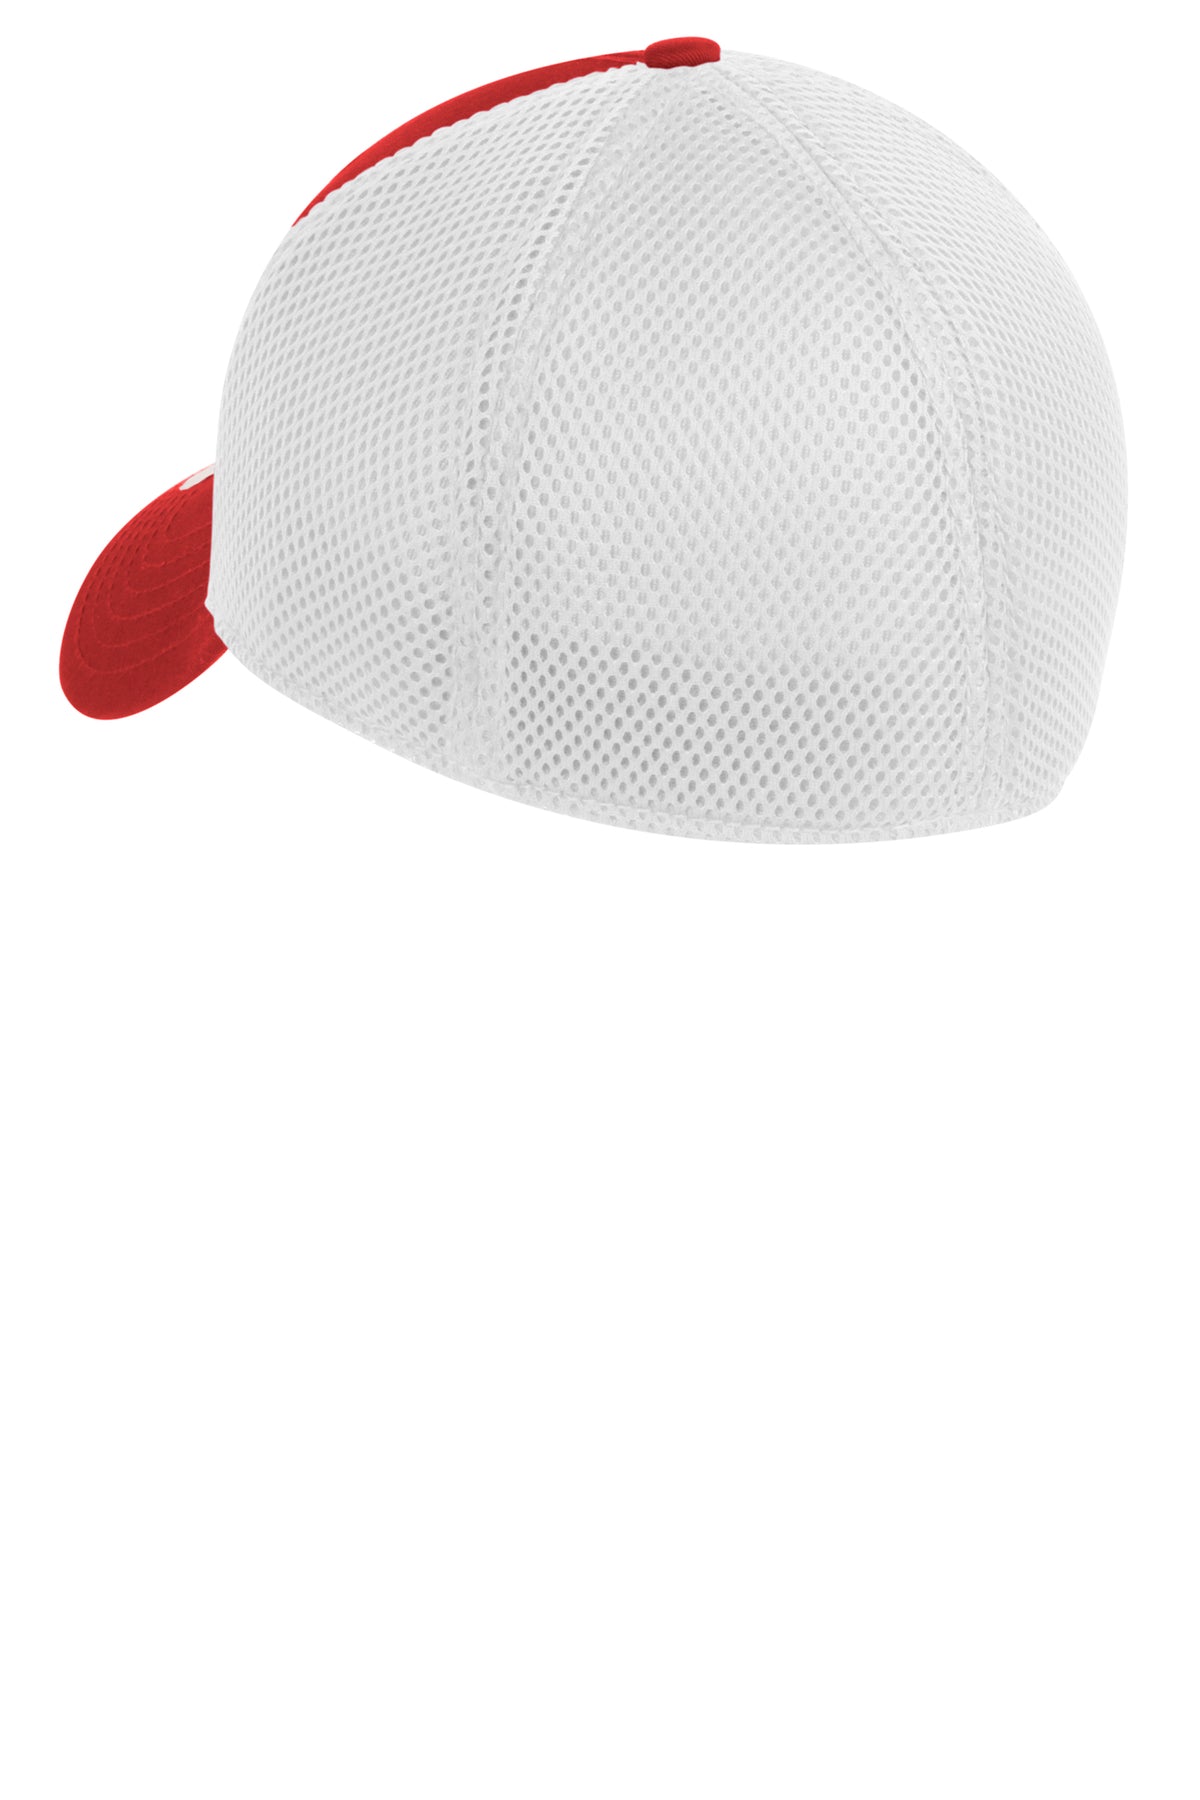 New Era Stretch Mesh Custom Caps, Scarlet Red/White